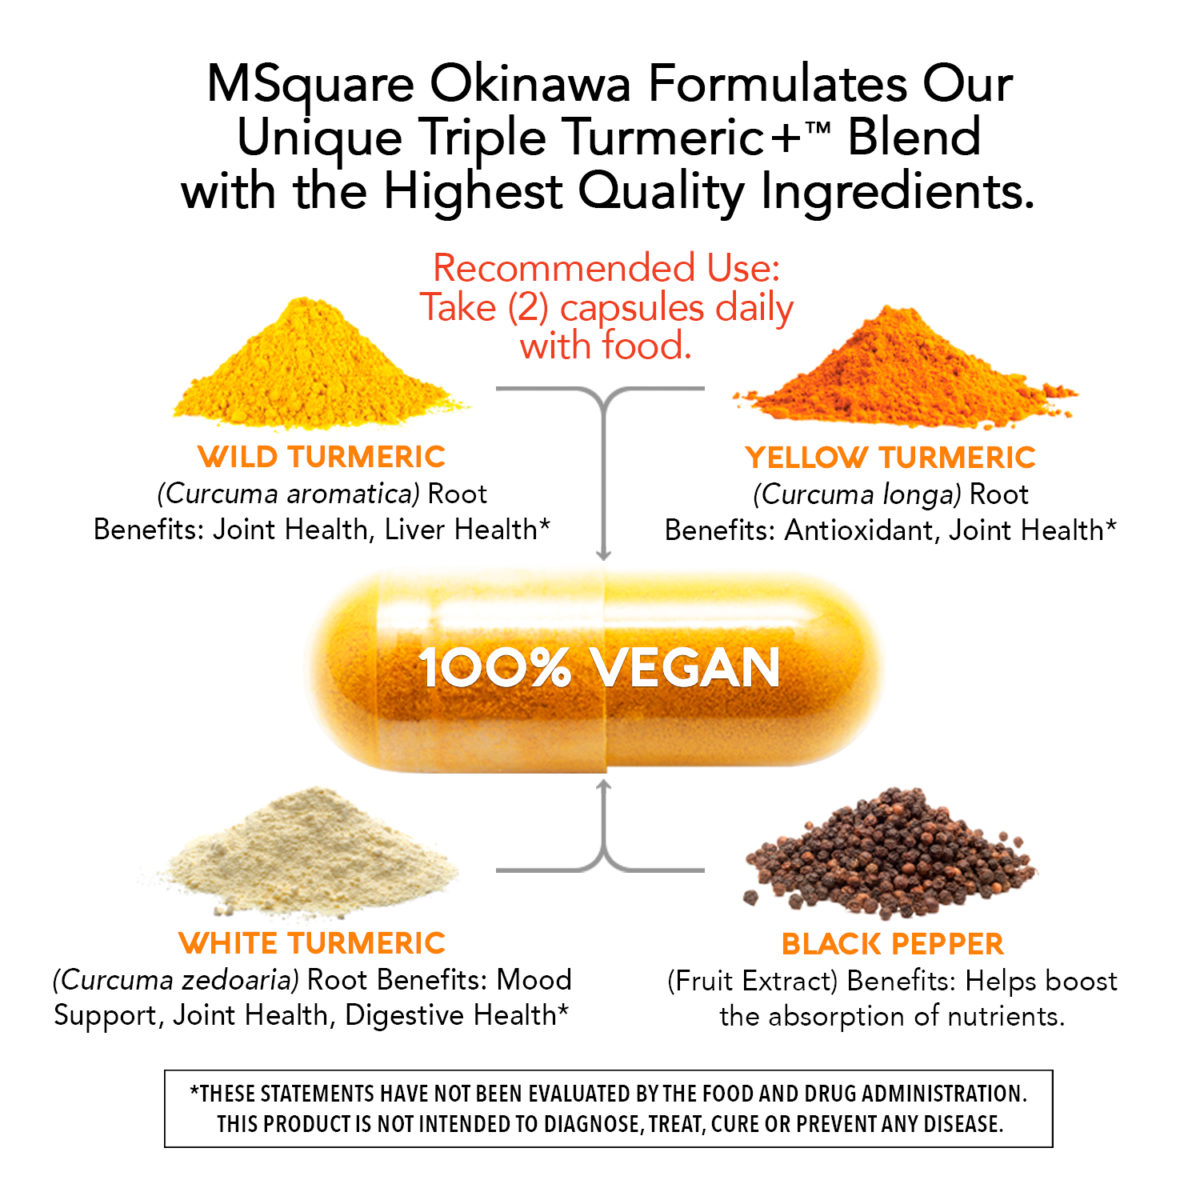 MSquare Okinawa Triple Turmeric + Product Benefits